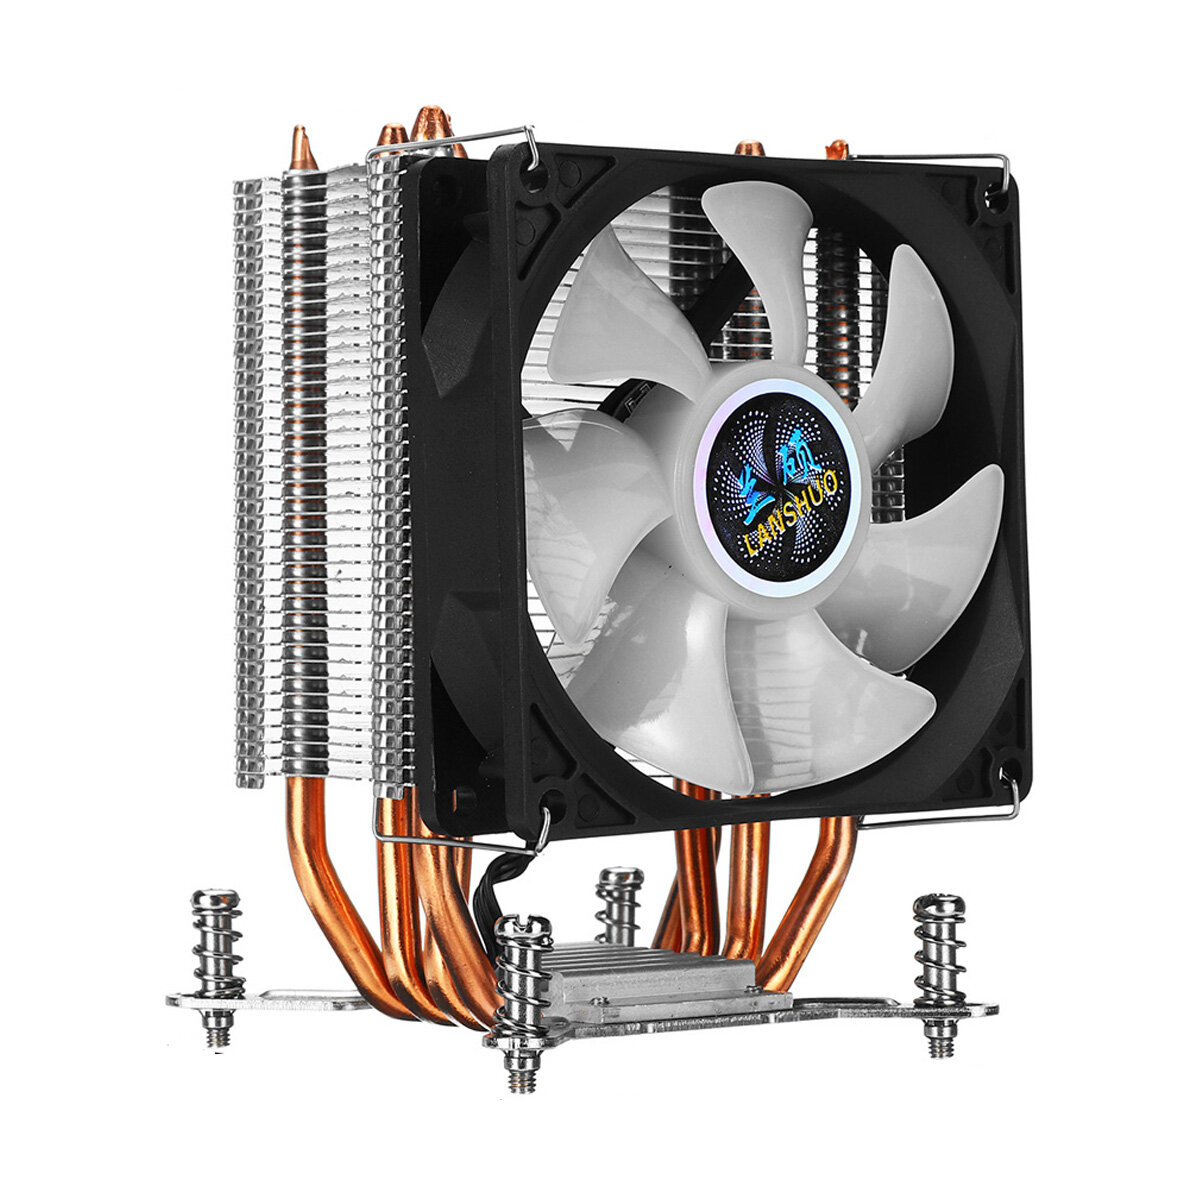 CPU Cooler Fan 4 Copper Heatpipesipes 90mm RGBA urora Light Cooling Fan for Compurter Intel LGA 2011 CPU Cooler Heatsink, Banggood  - buy with discount